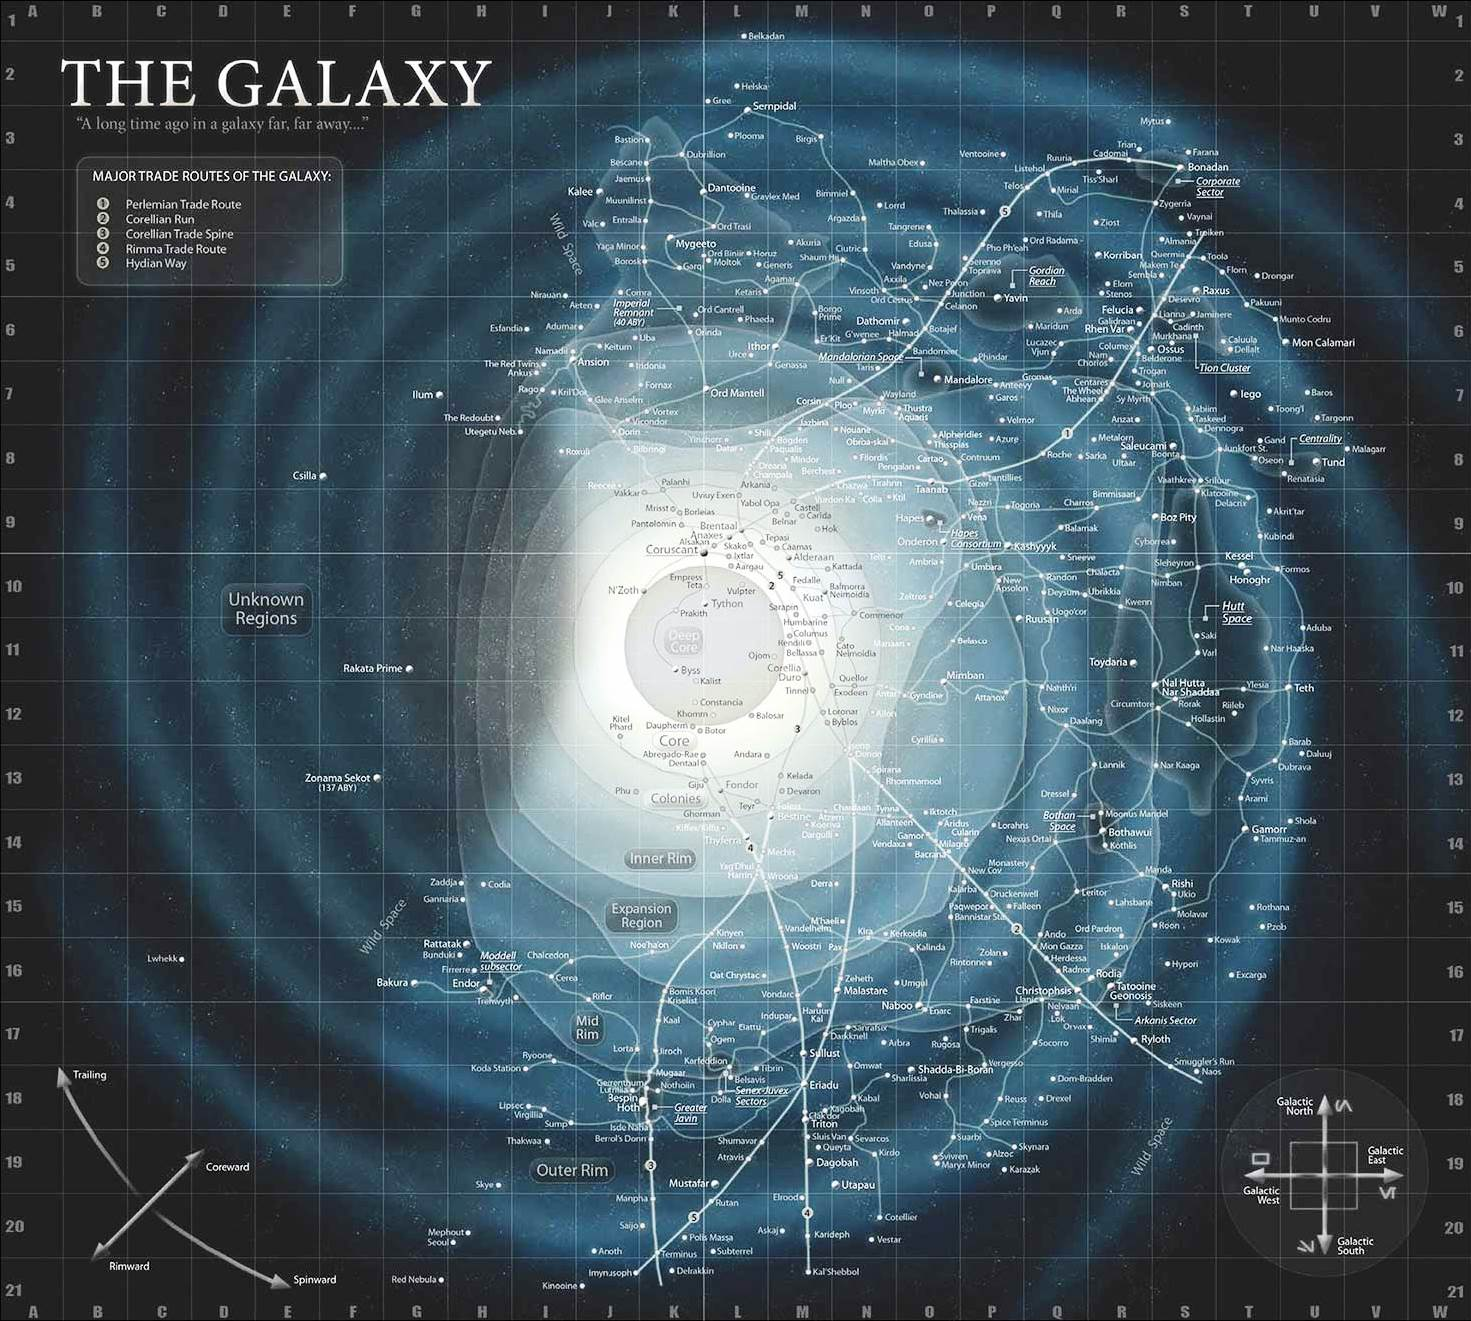 star wars map of galaxy The Galaxy Wookieepedia Fandom star wars map of galaxy